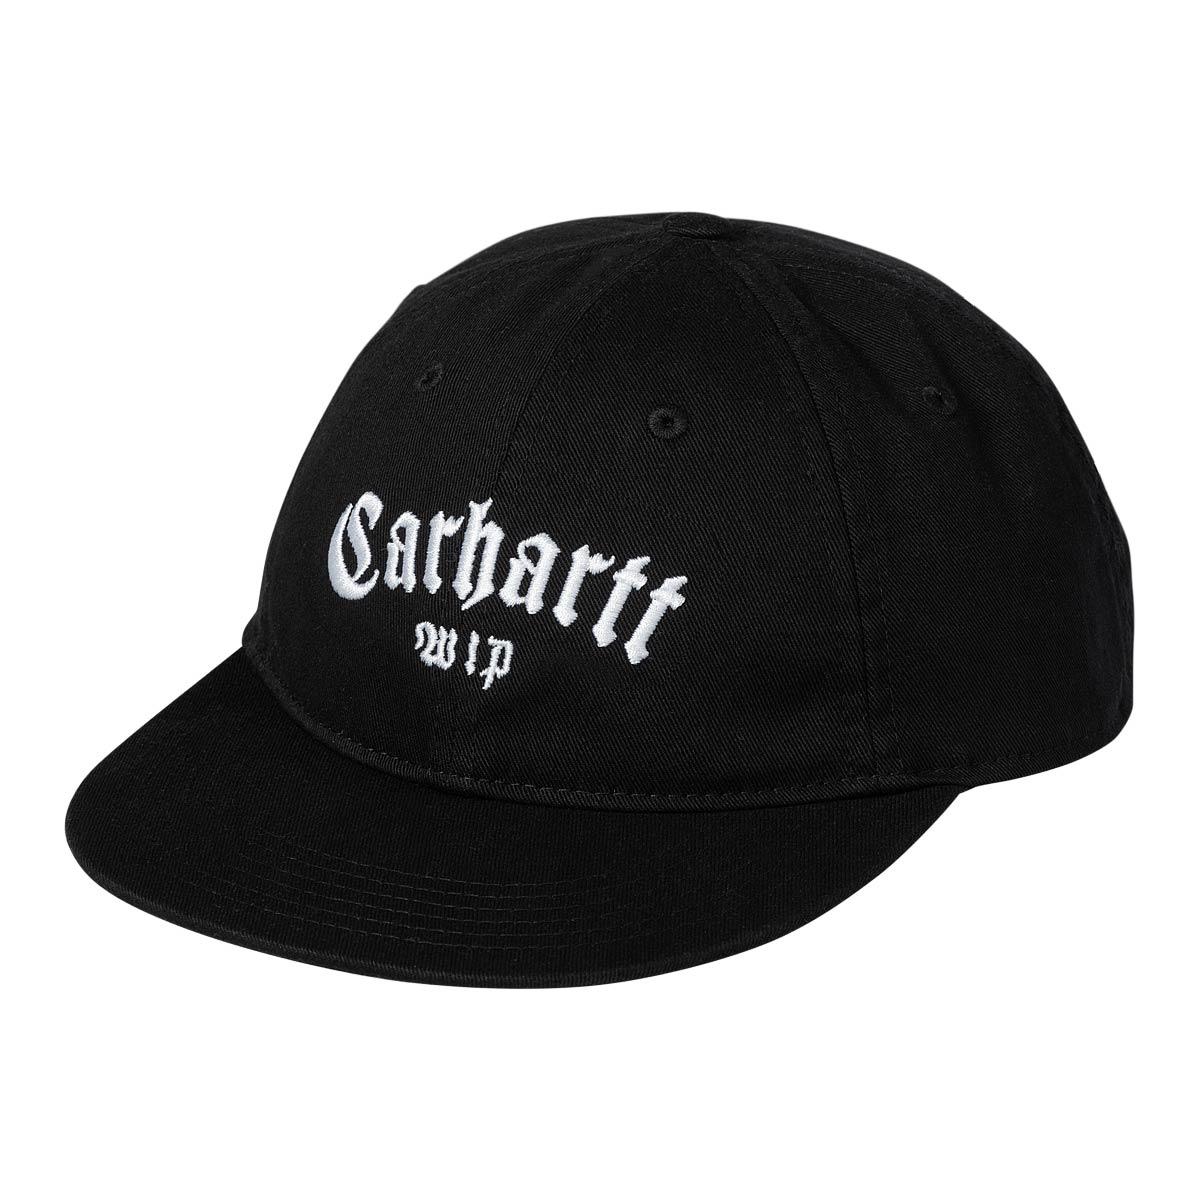 Image of Carhartt Wip Onyx Cap, Black/white